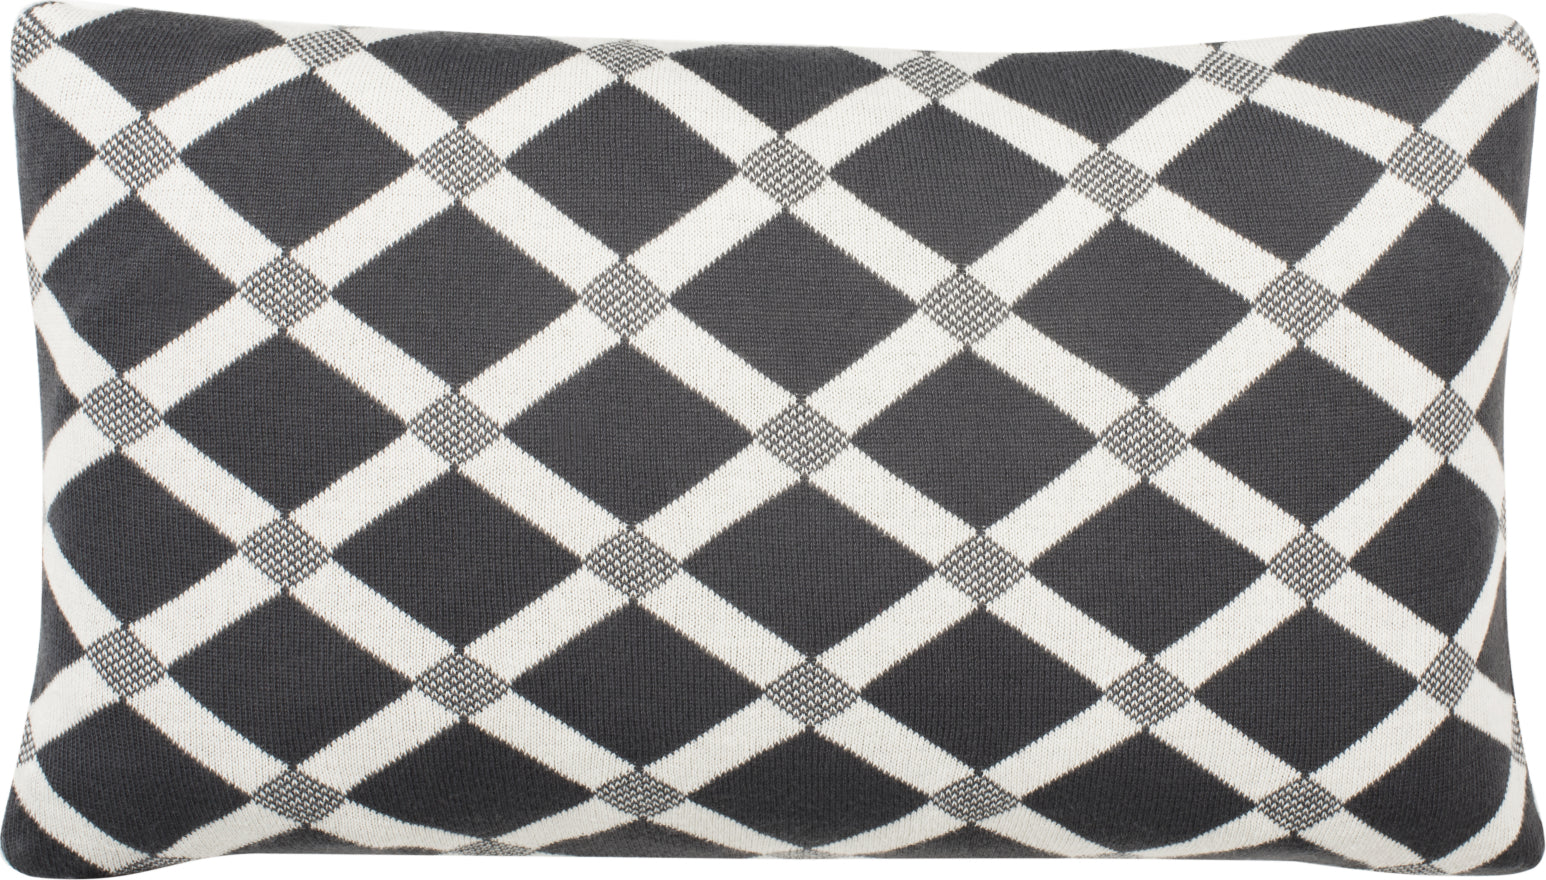 Safavieh Diamond Knit Printed Patterns Dark Grey/Natural main image